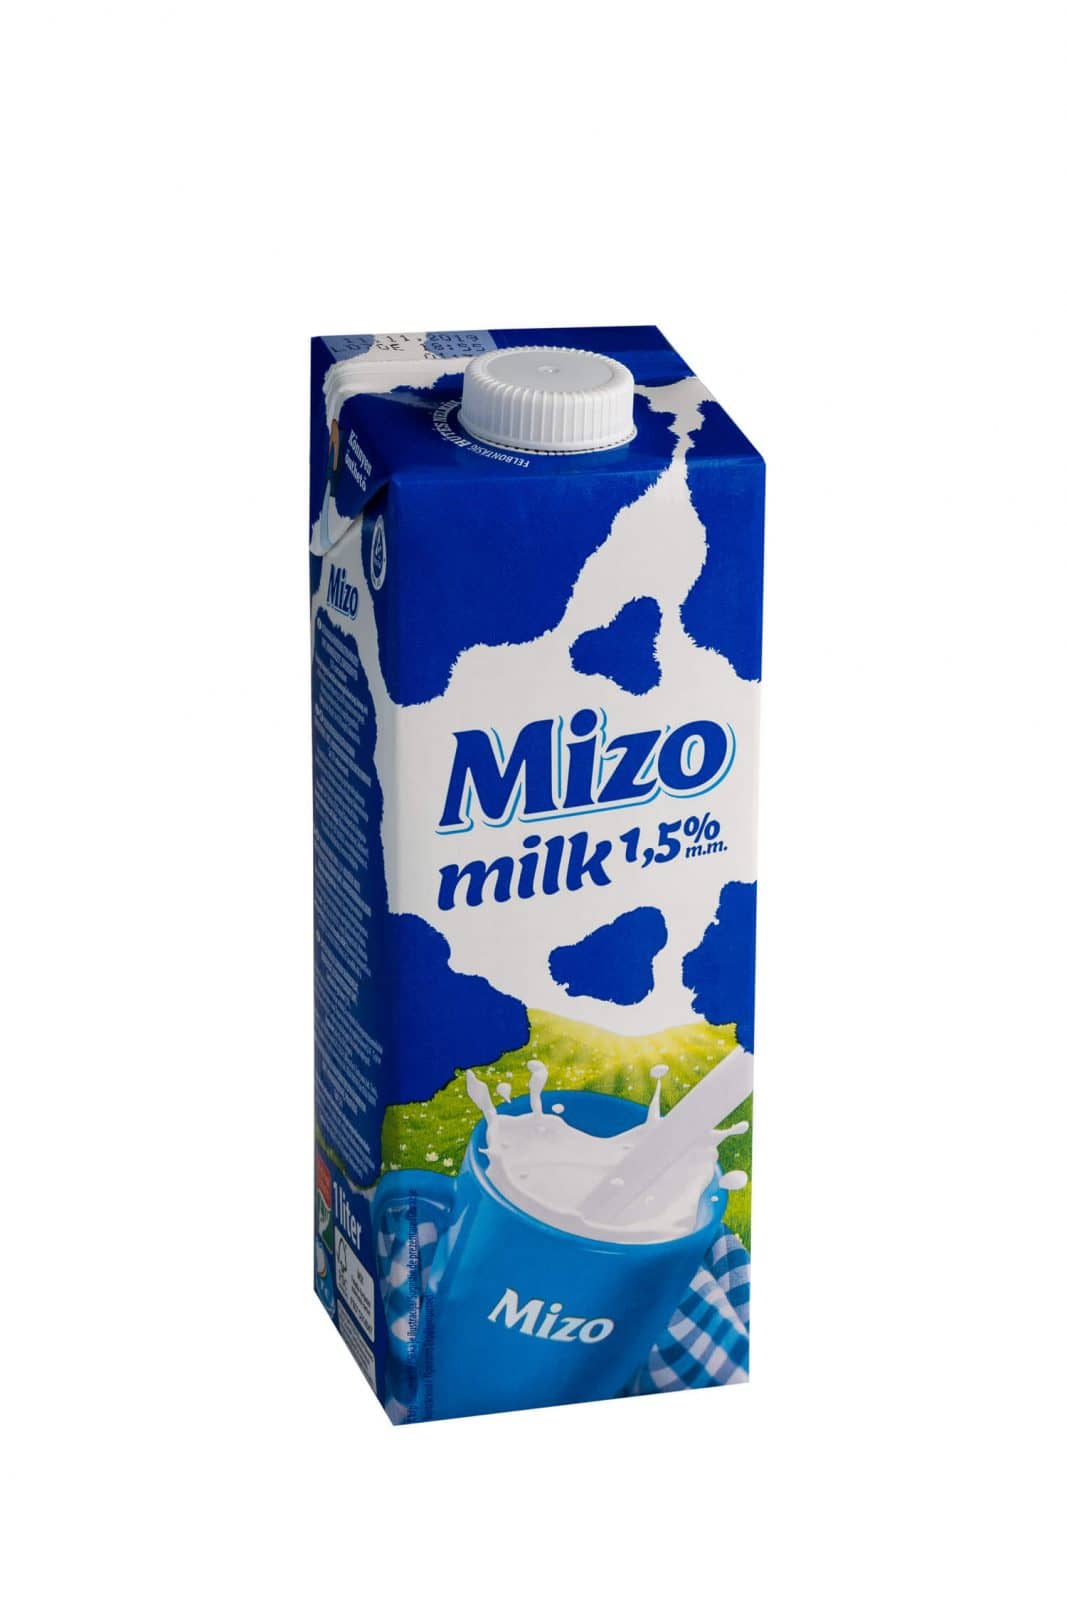 KT FOOD Mizo milk 1.5